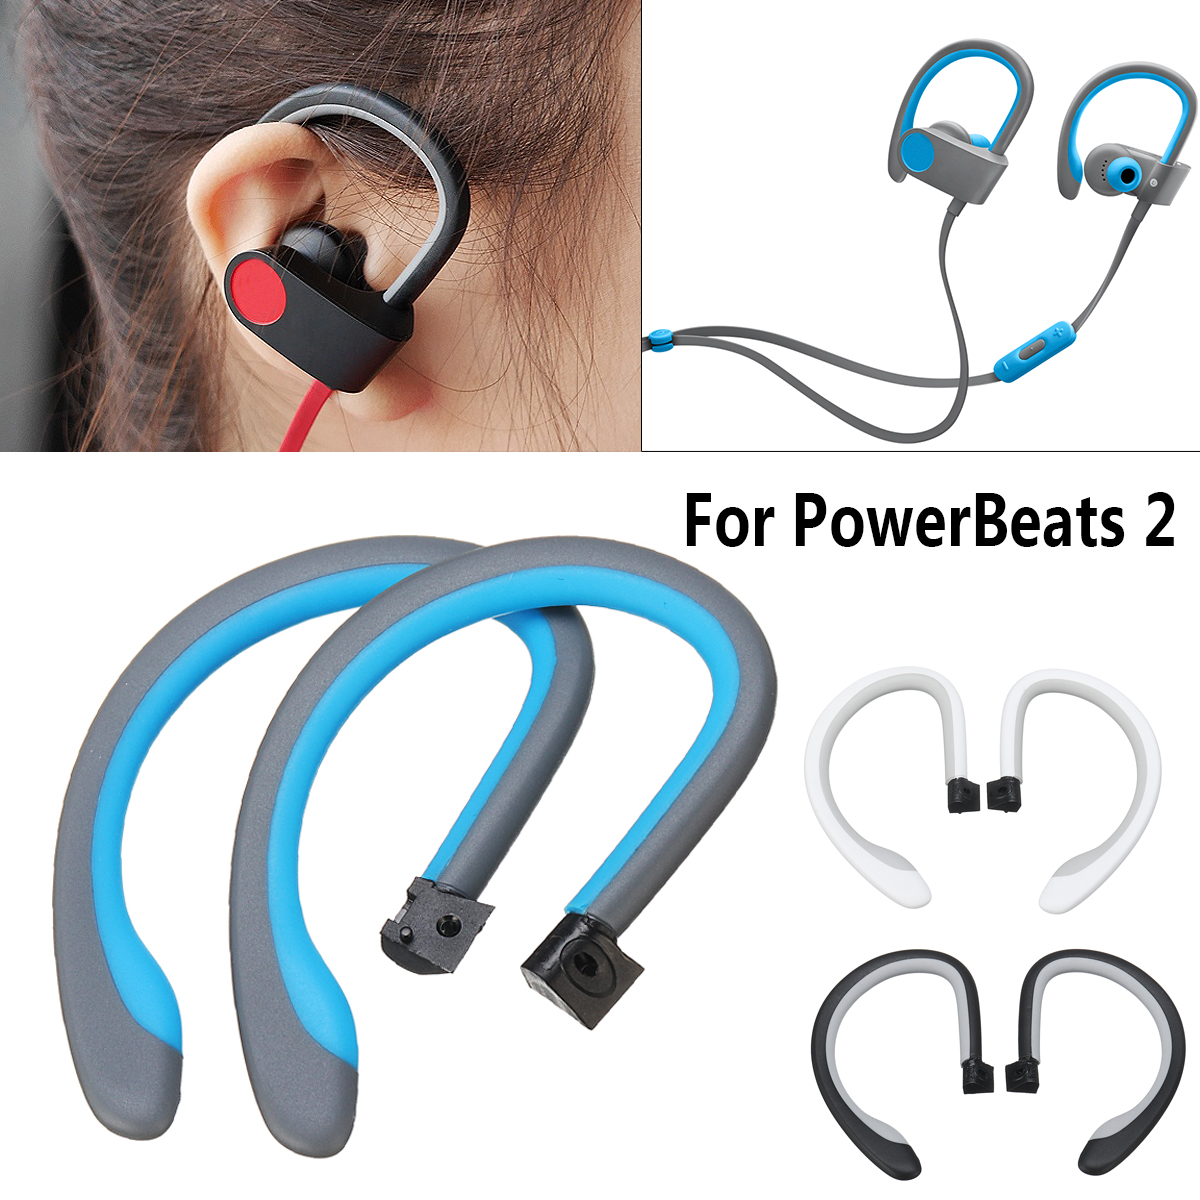 powerbeats 2 earbud tips